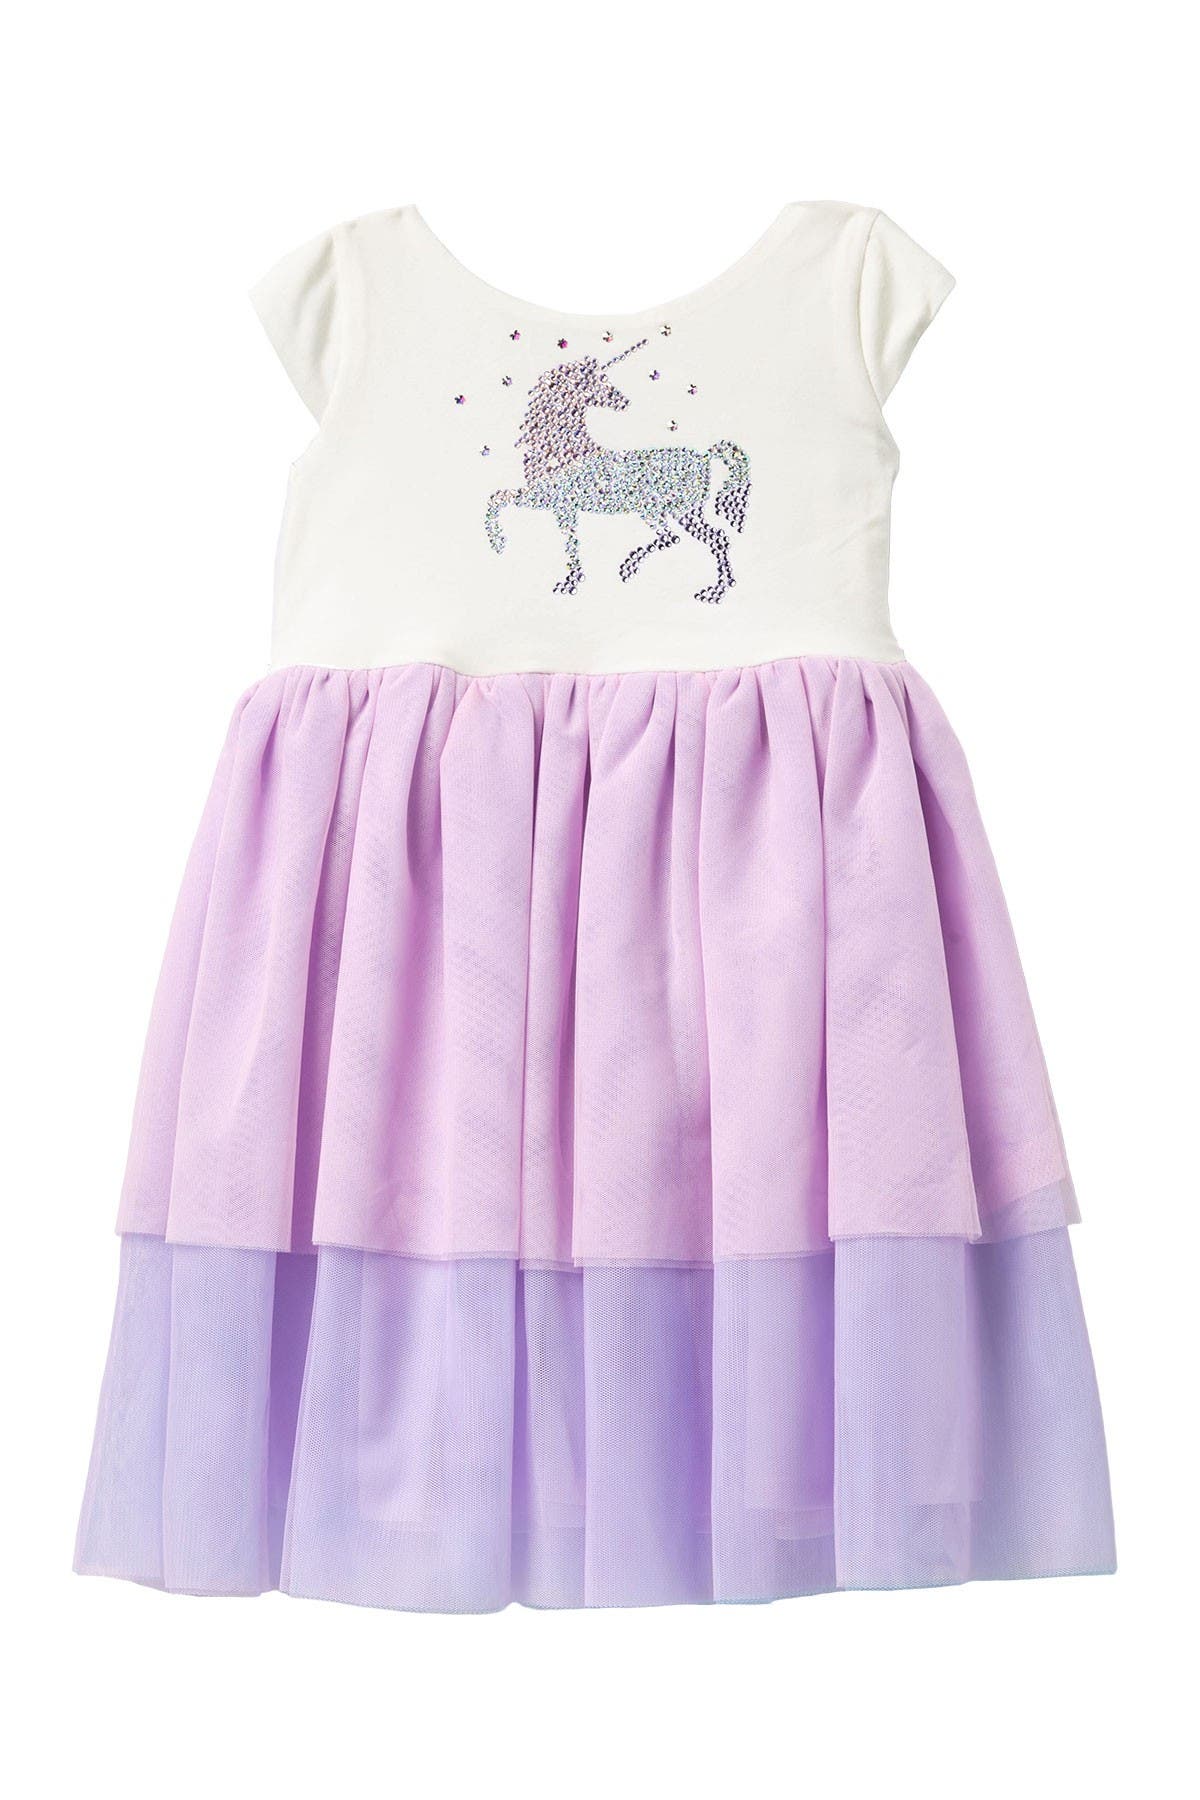 nordstrom unicorn dress